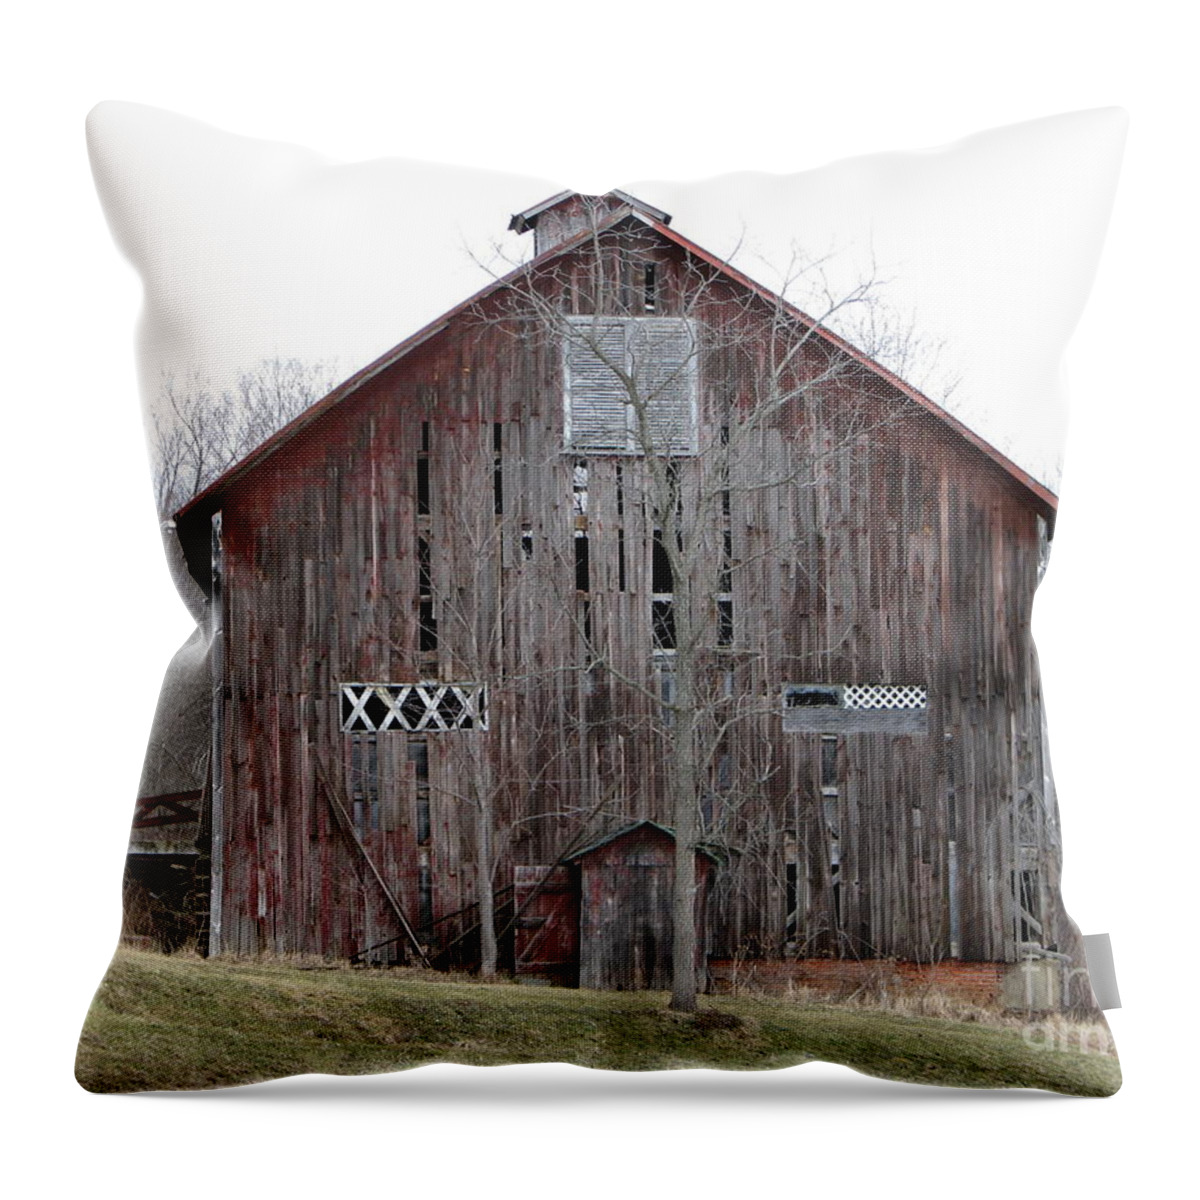 Barn Throw Pillow featuring the photograph Defunct Barn by Michael Krek